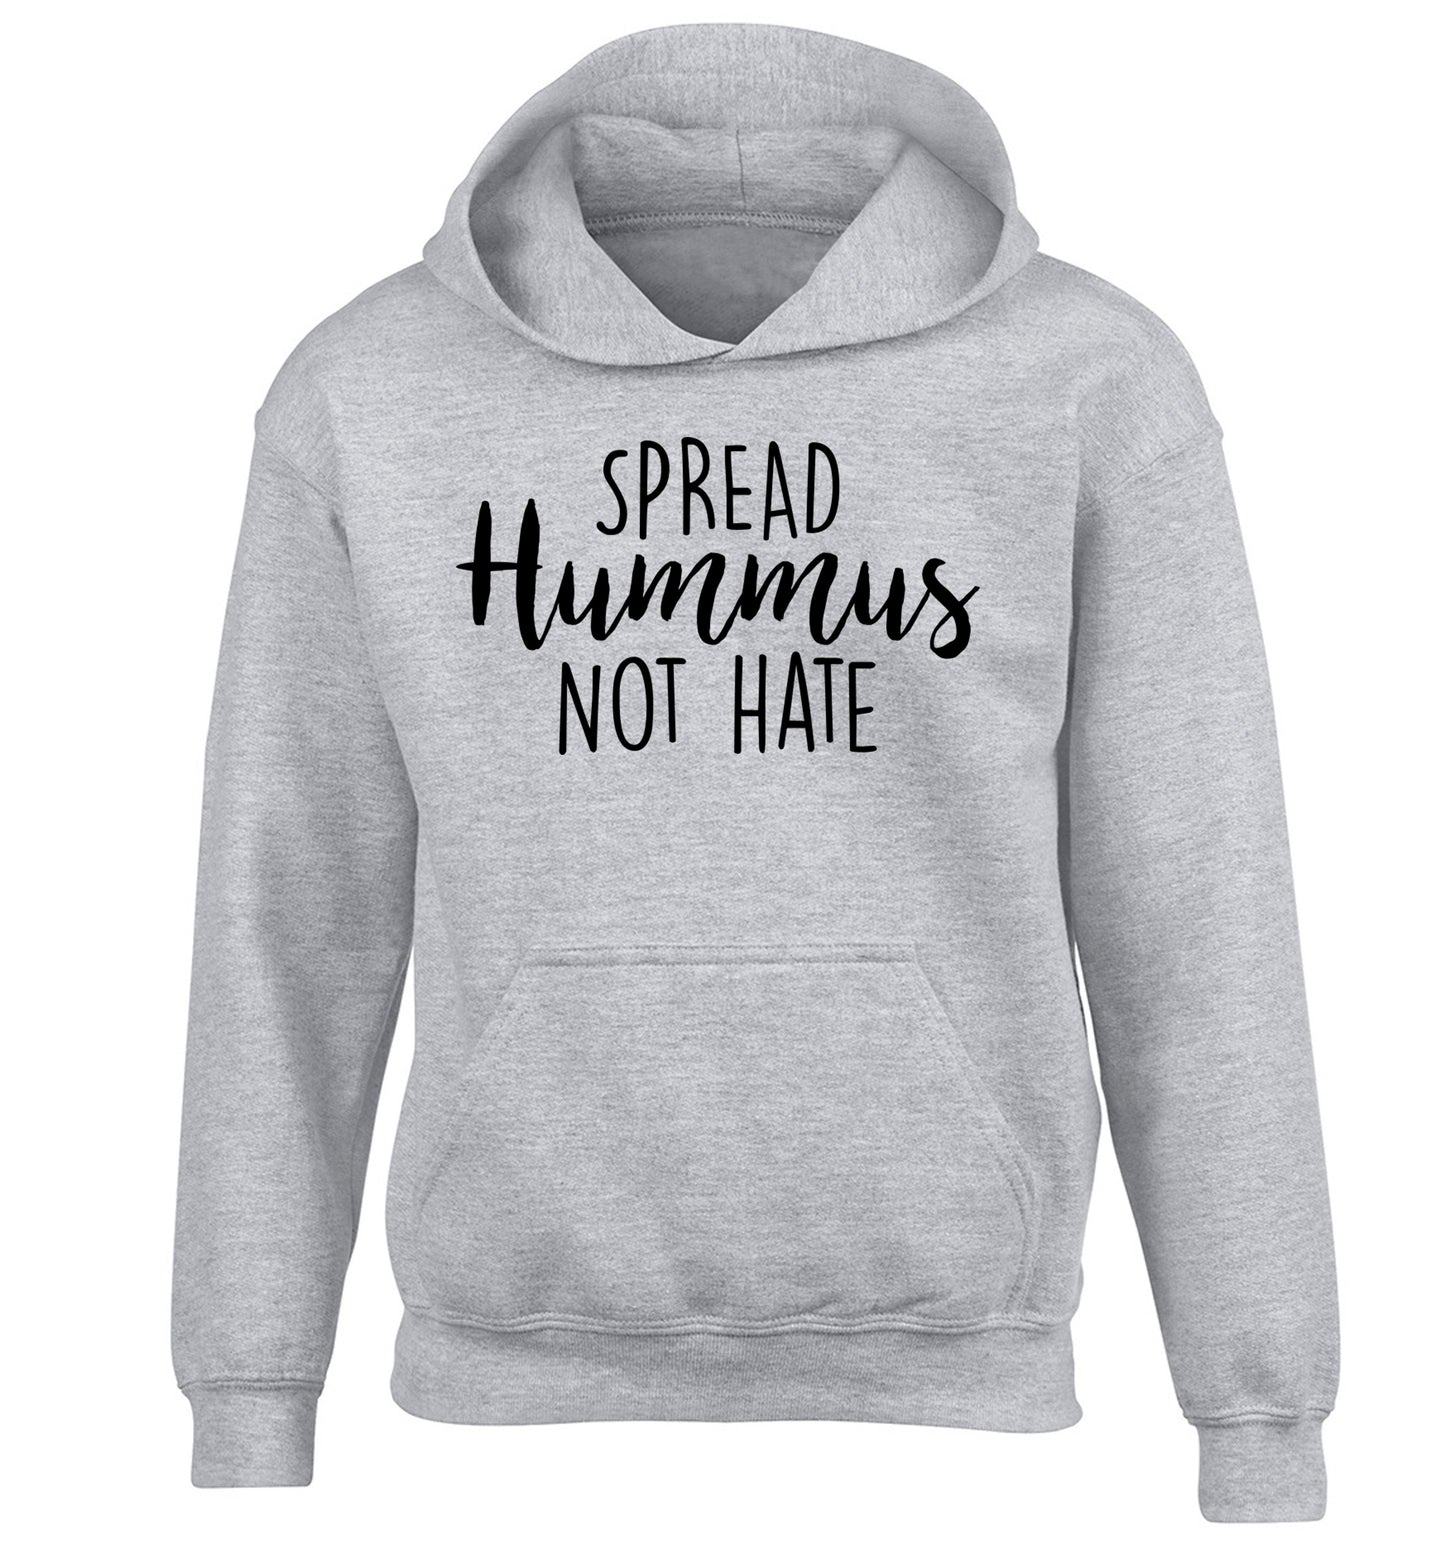 Spread hummus not hate script text children's grey hoodie 12-14 Years